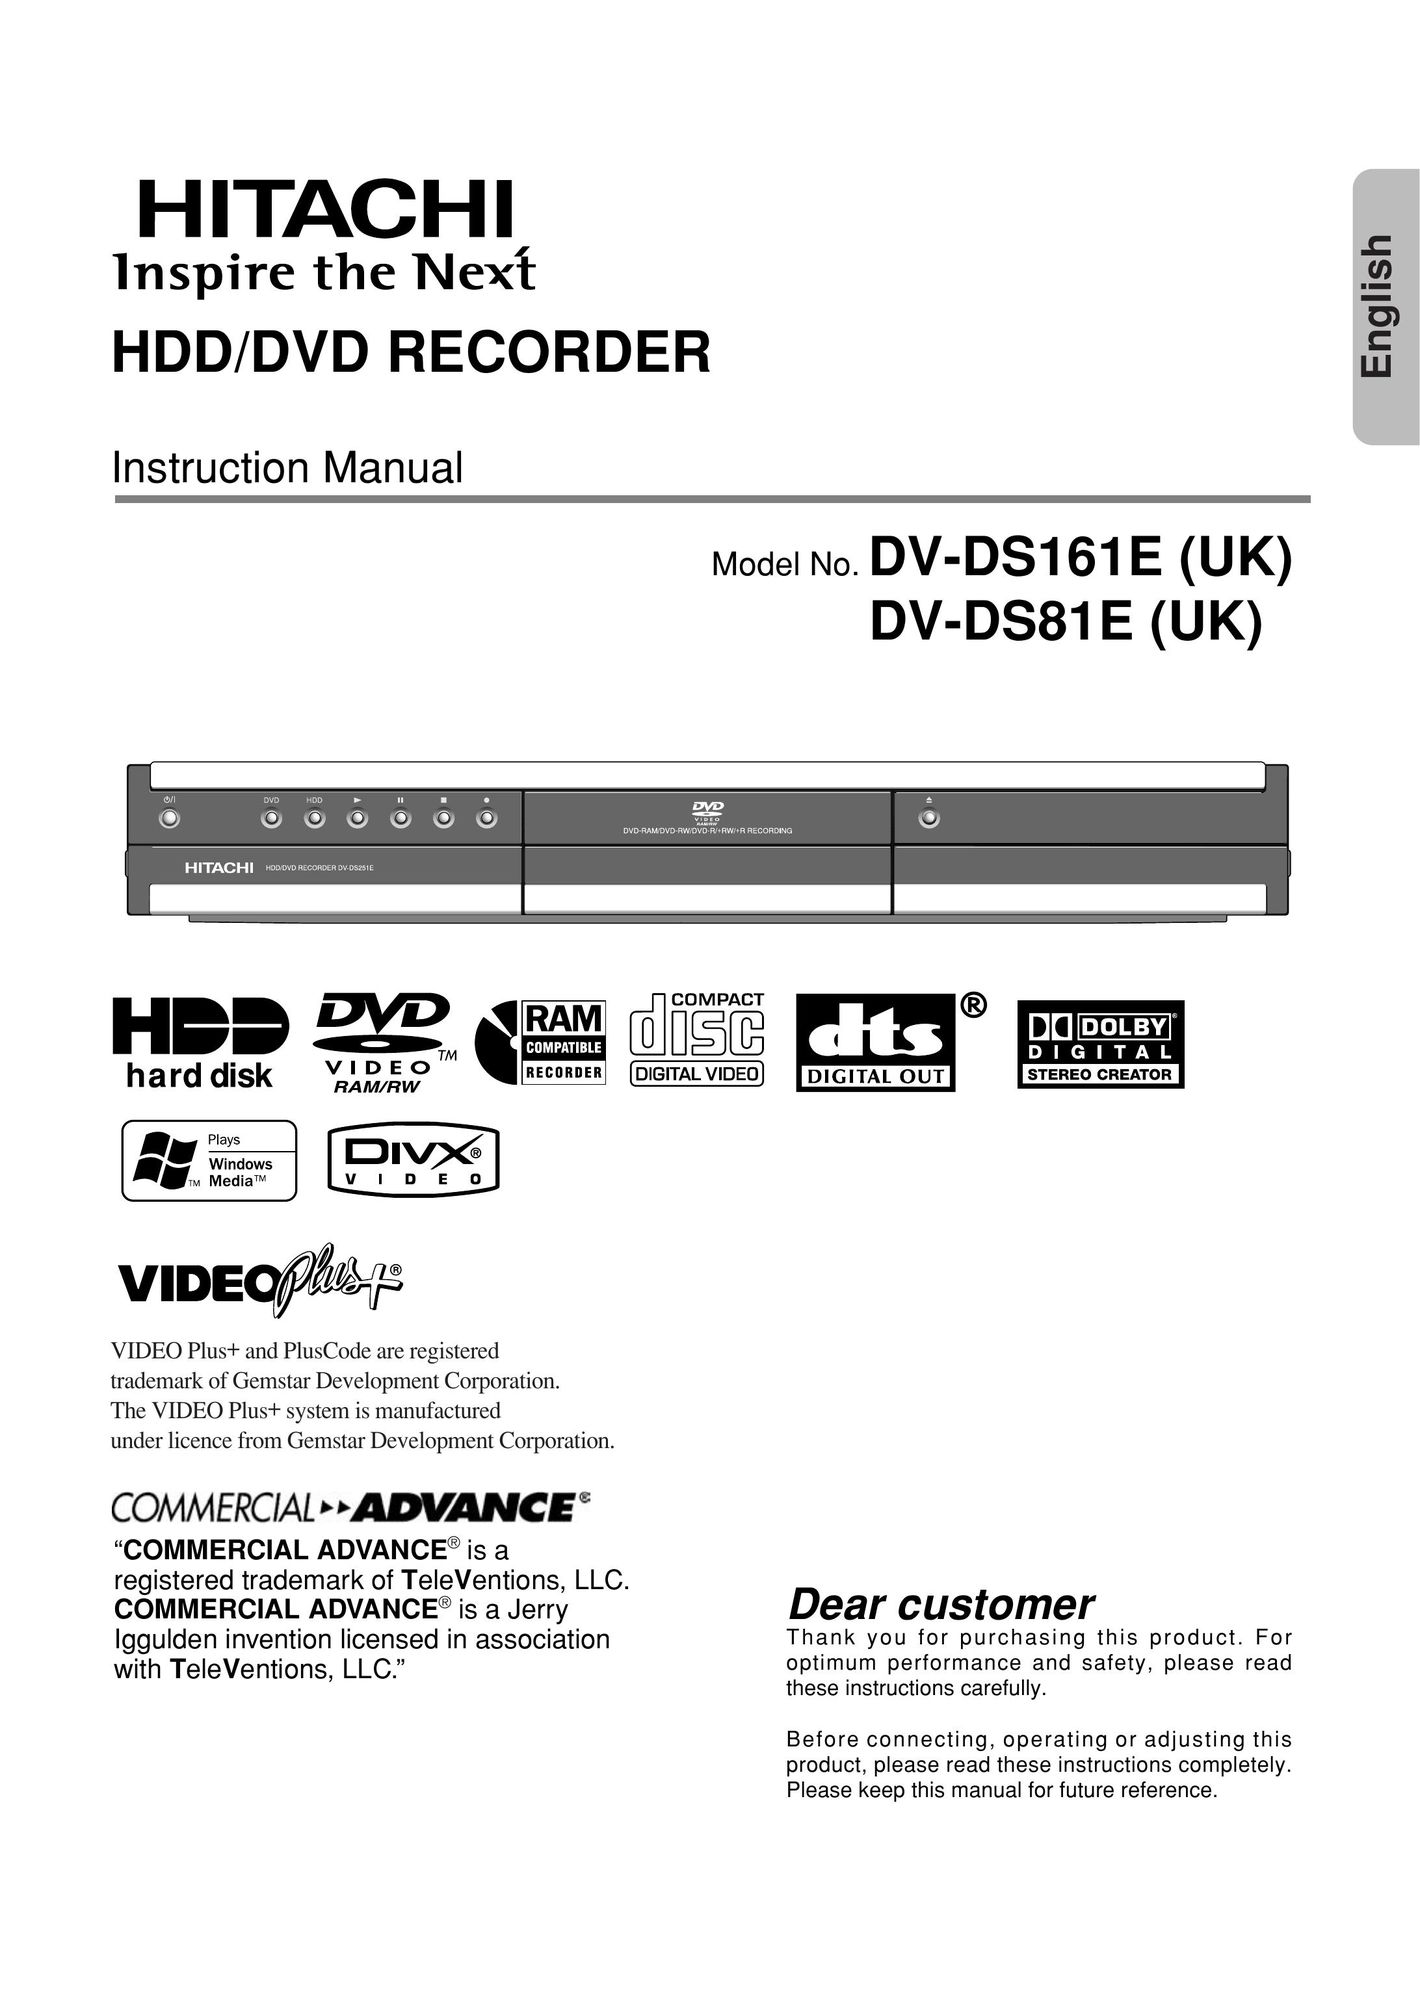 Hitachi DV-DS161E DVR User Manual